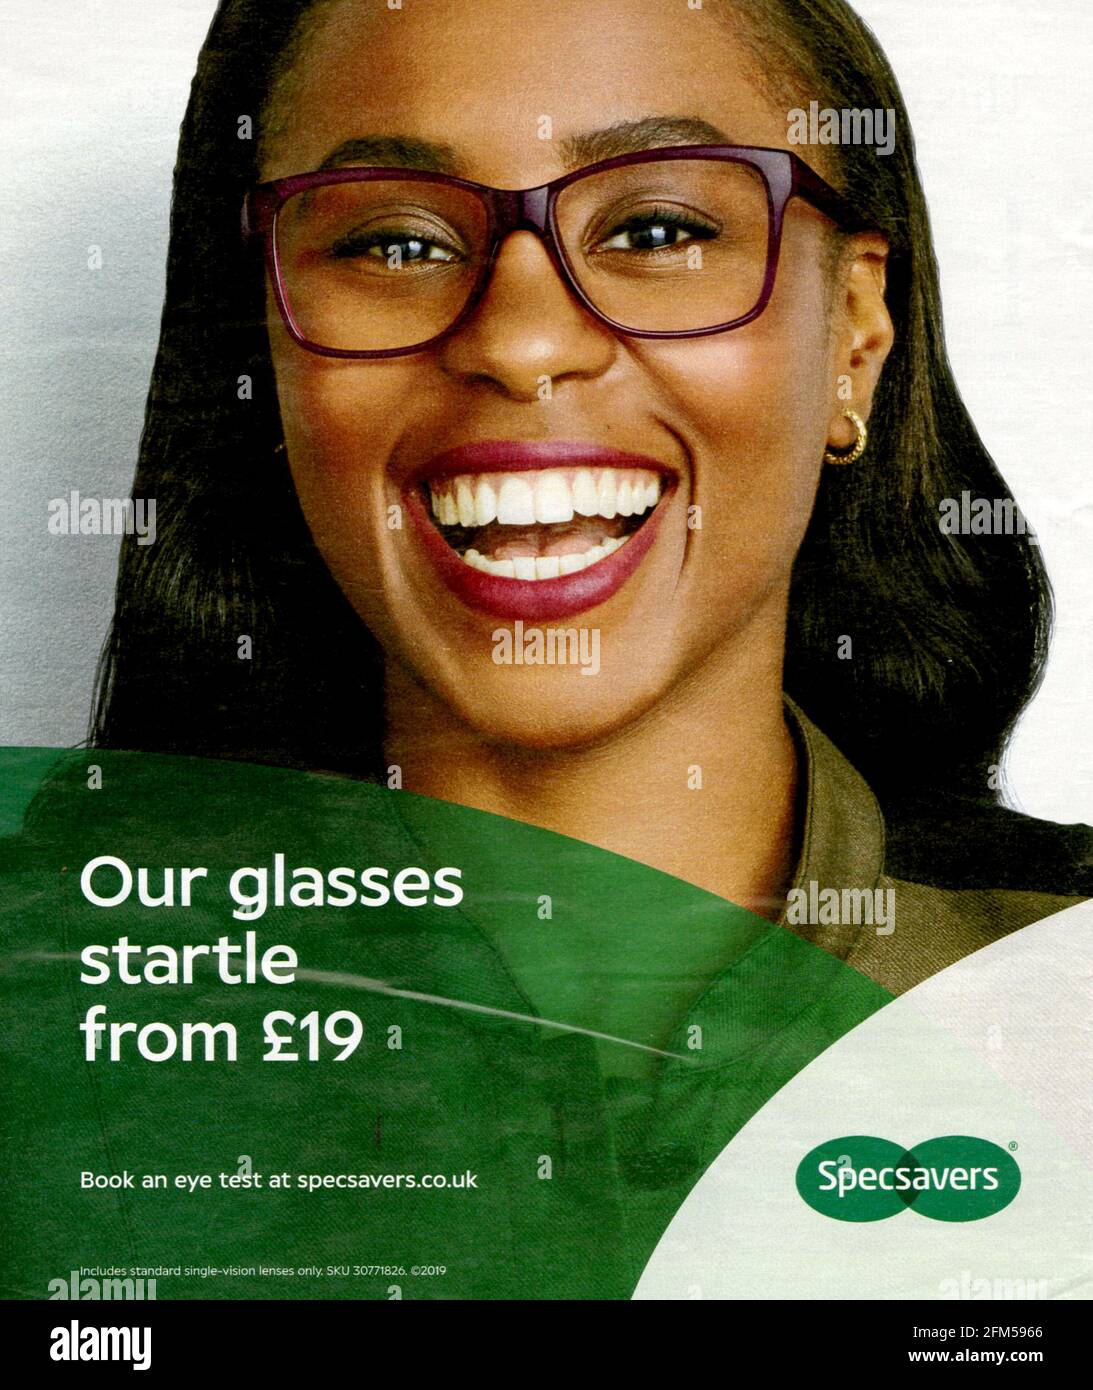 2020s UK Specsavers Magazine Advert Stock Photo